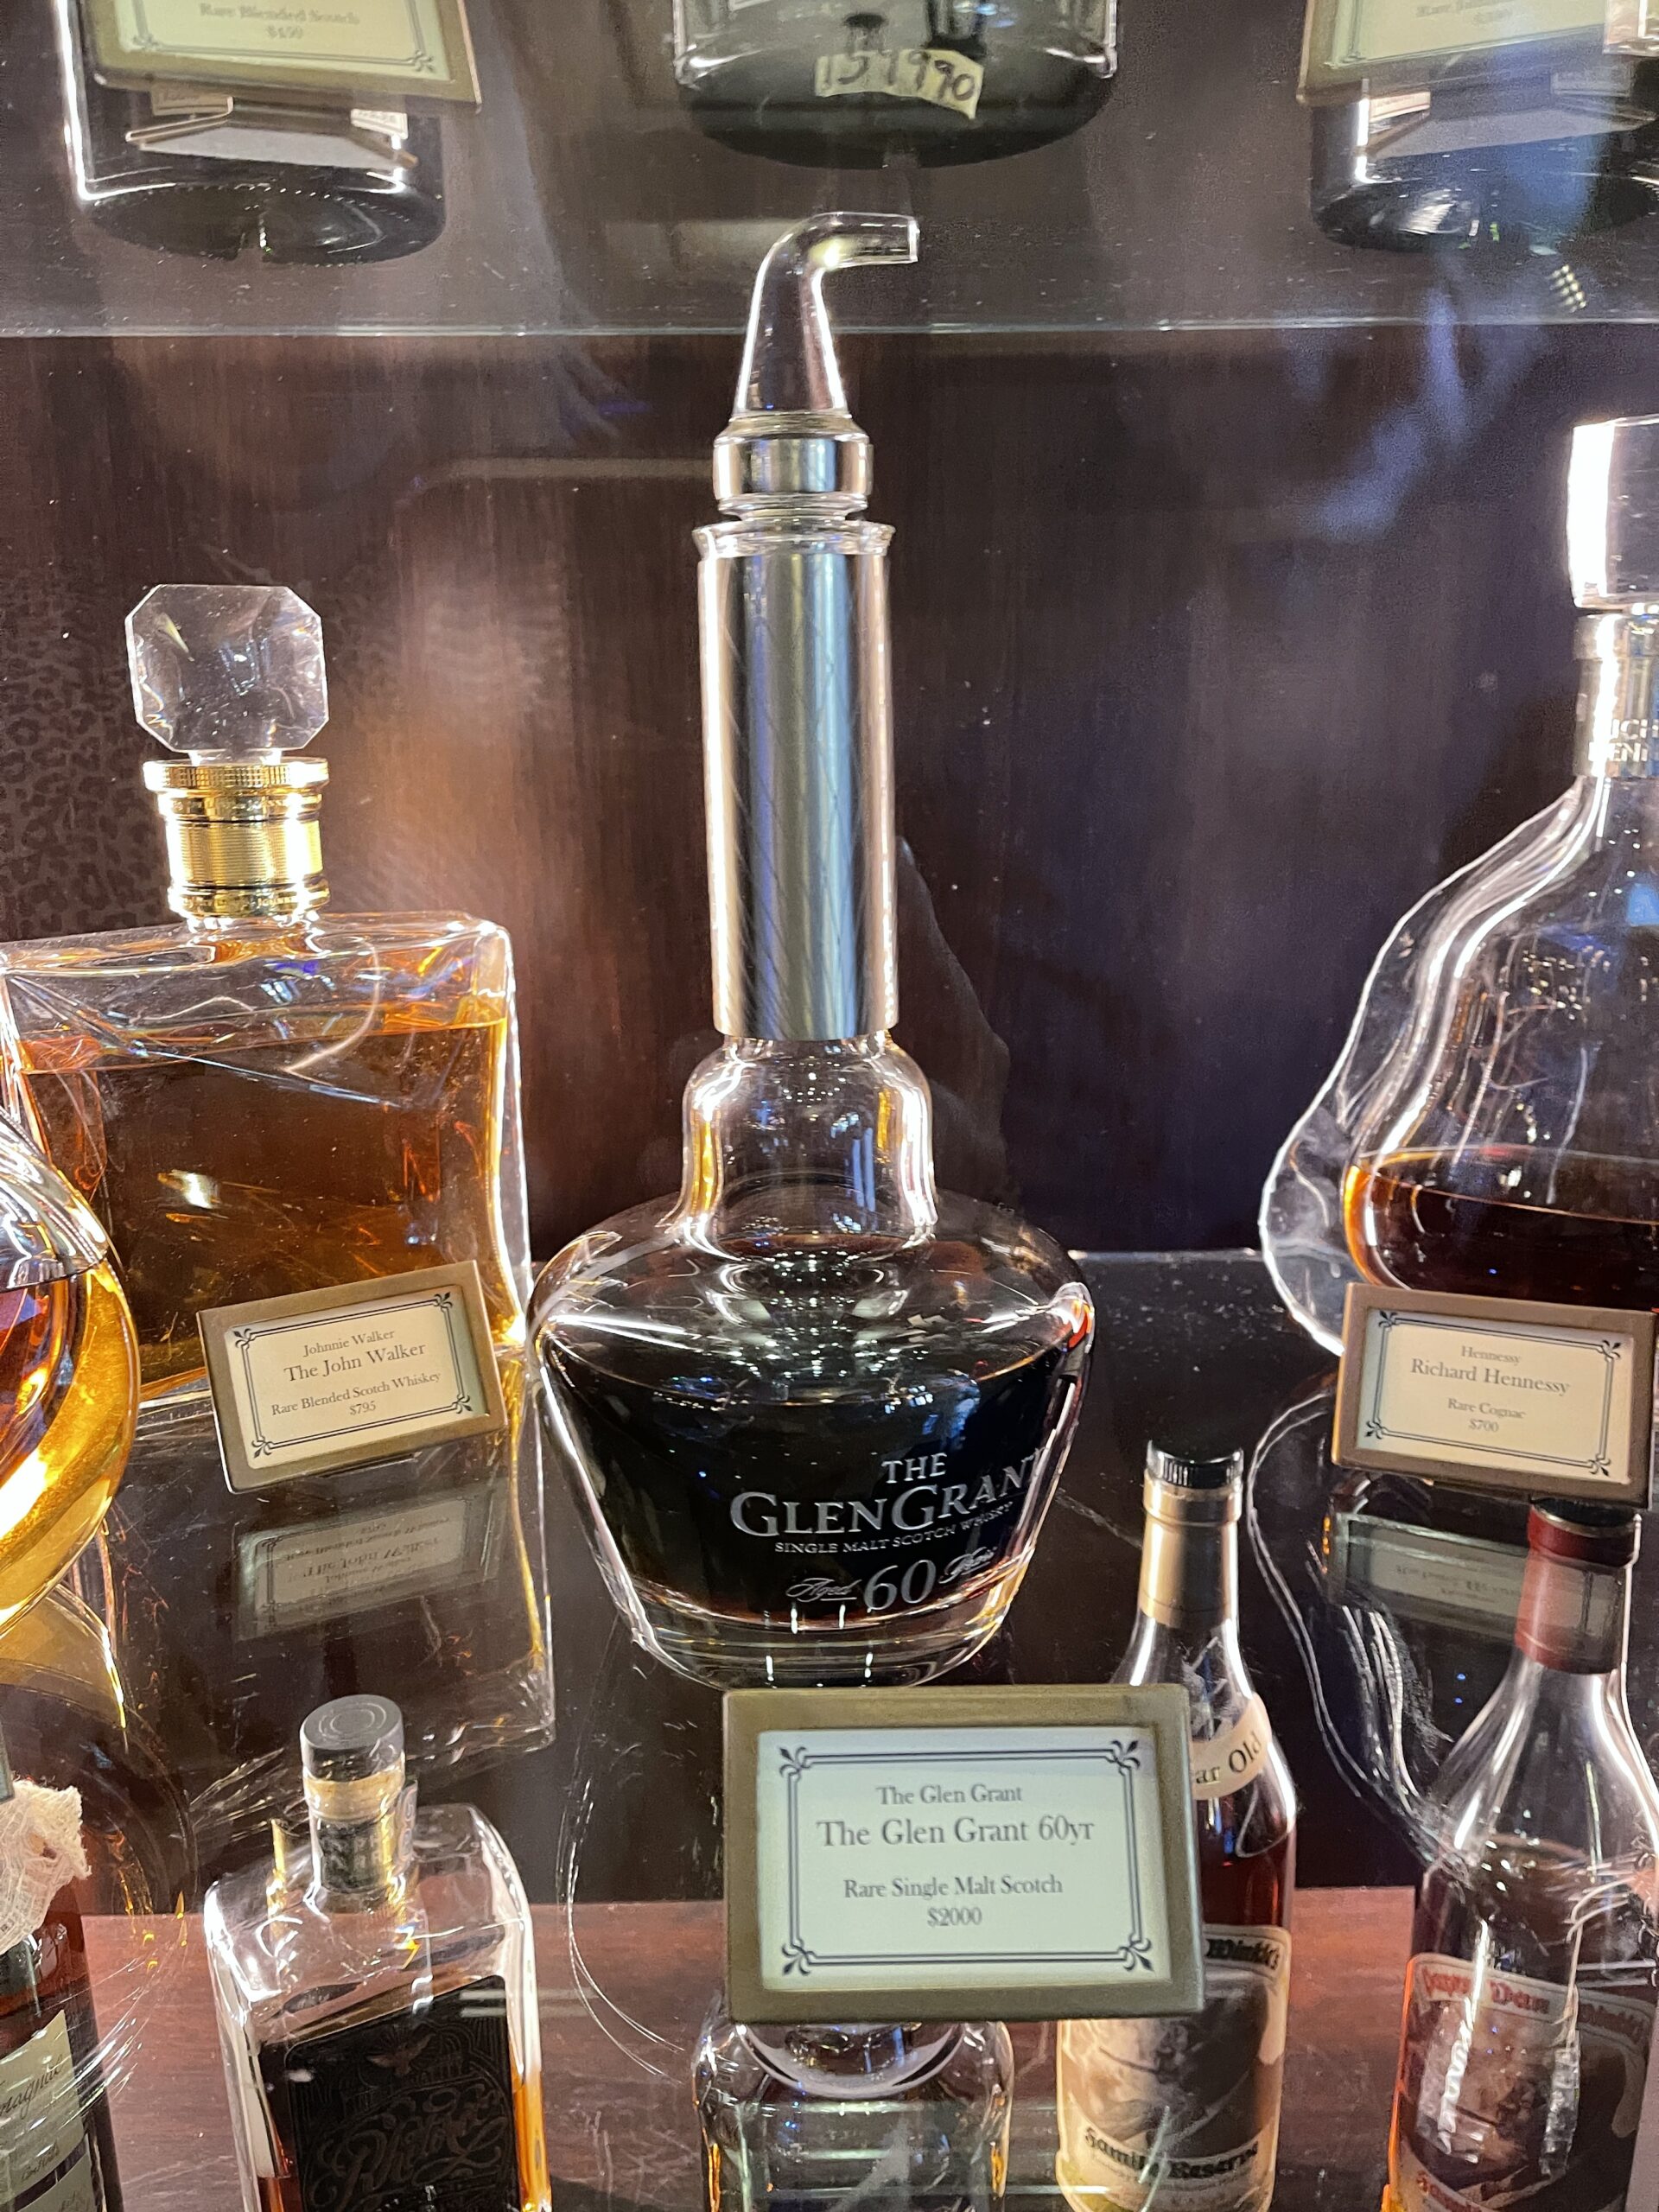 The Glen Grant 60-year Scotch.